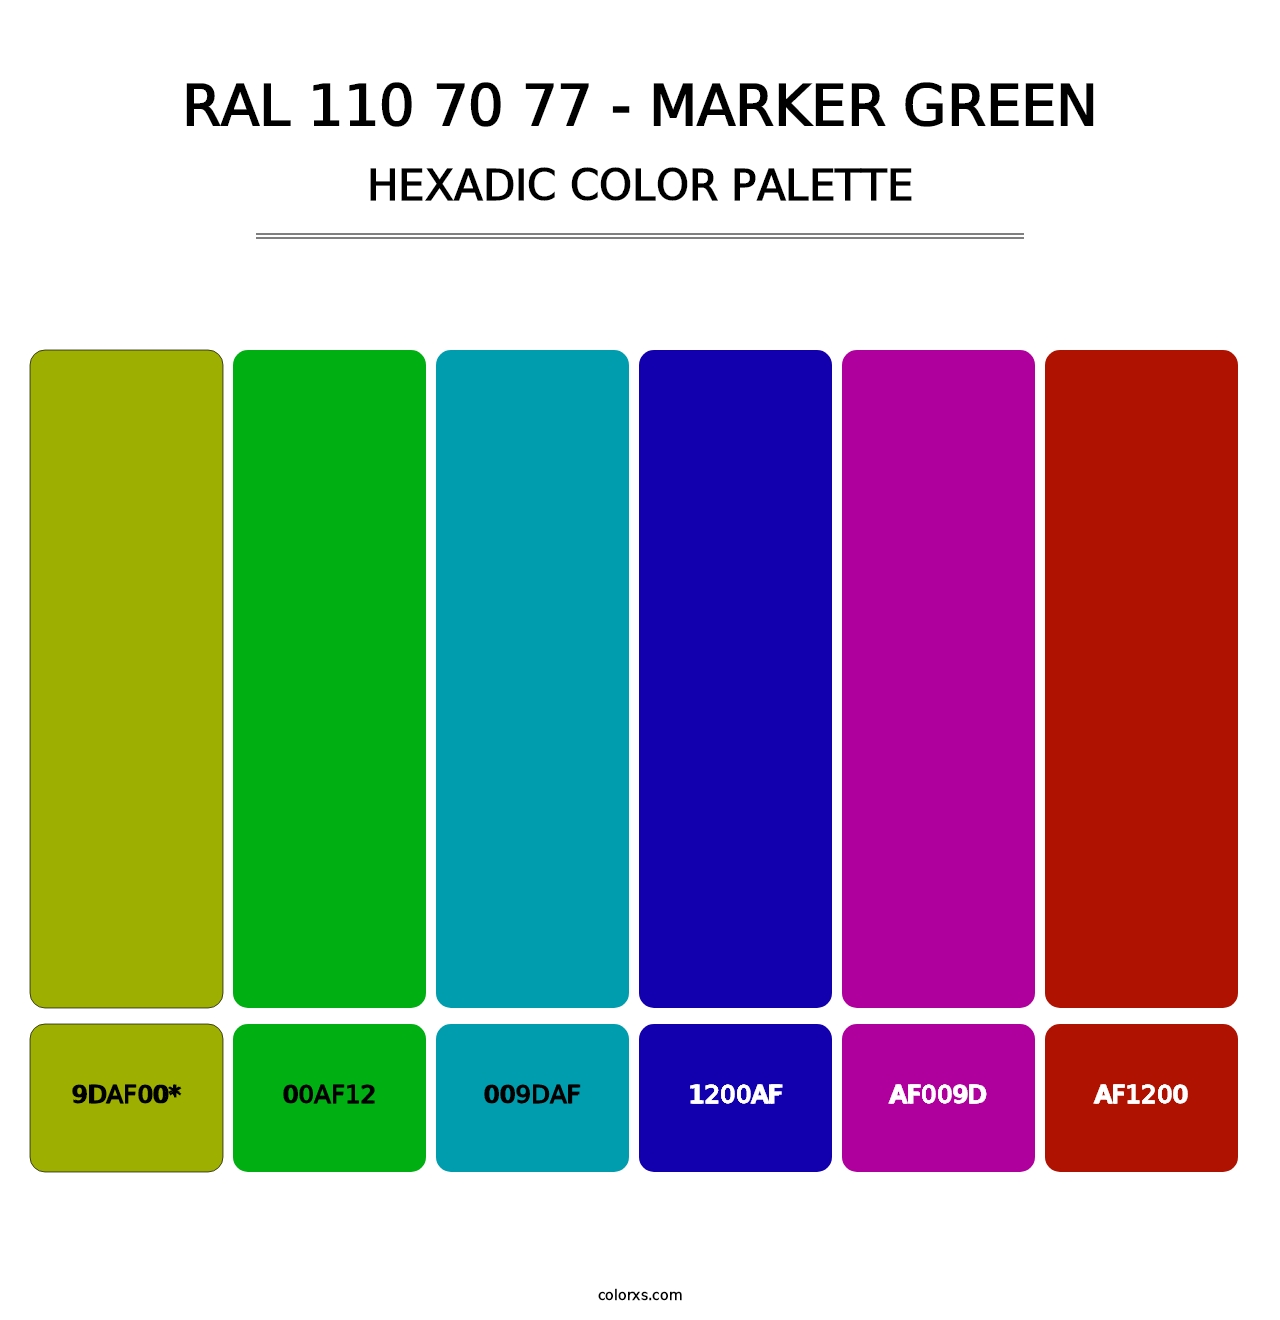 RAL 110 70 77 - Marker Green - Hexadic Color Palette